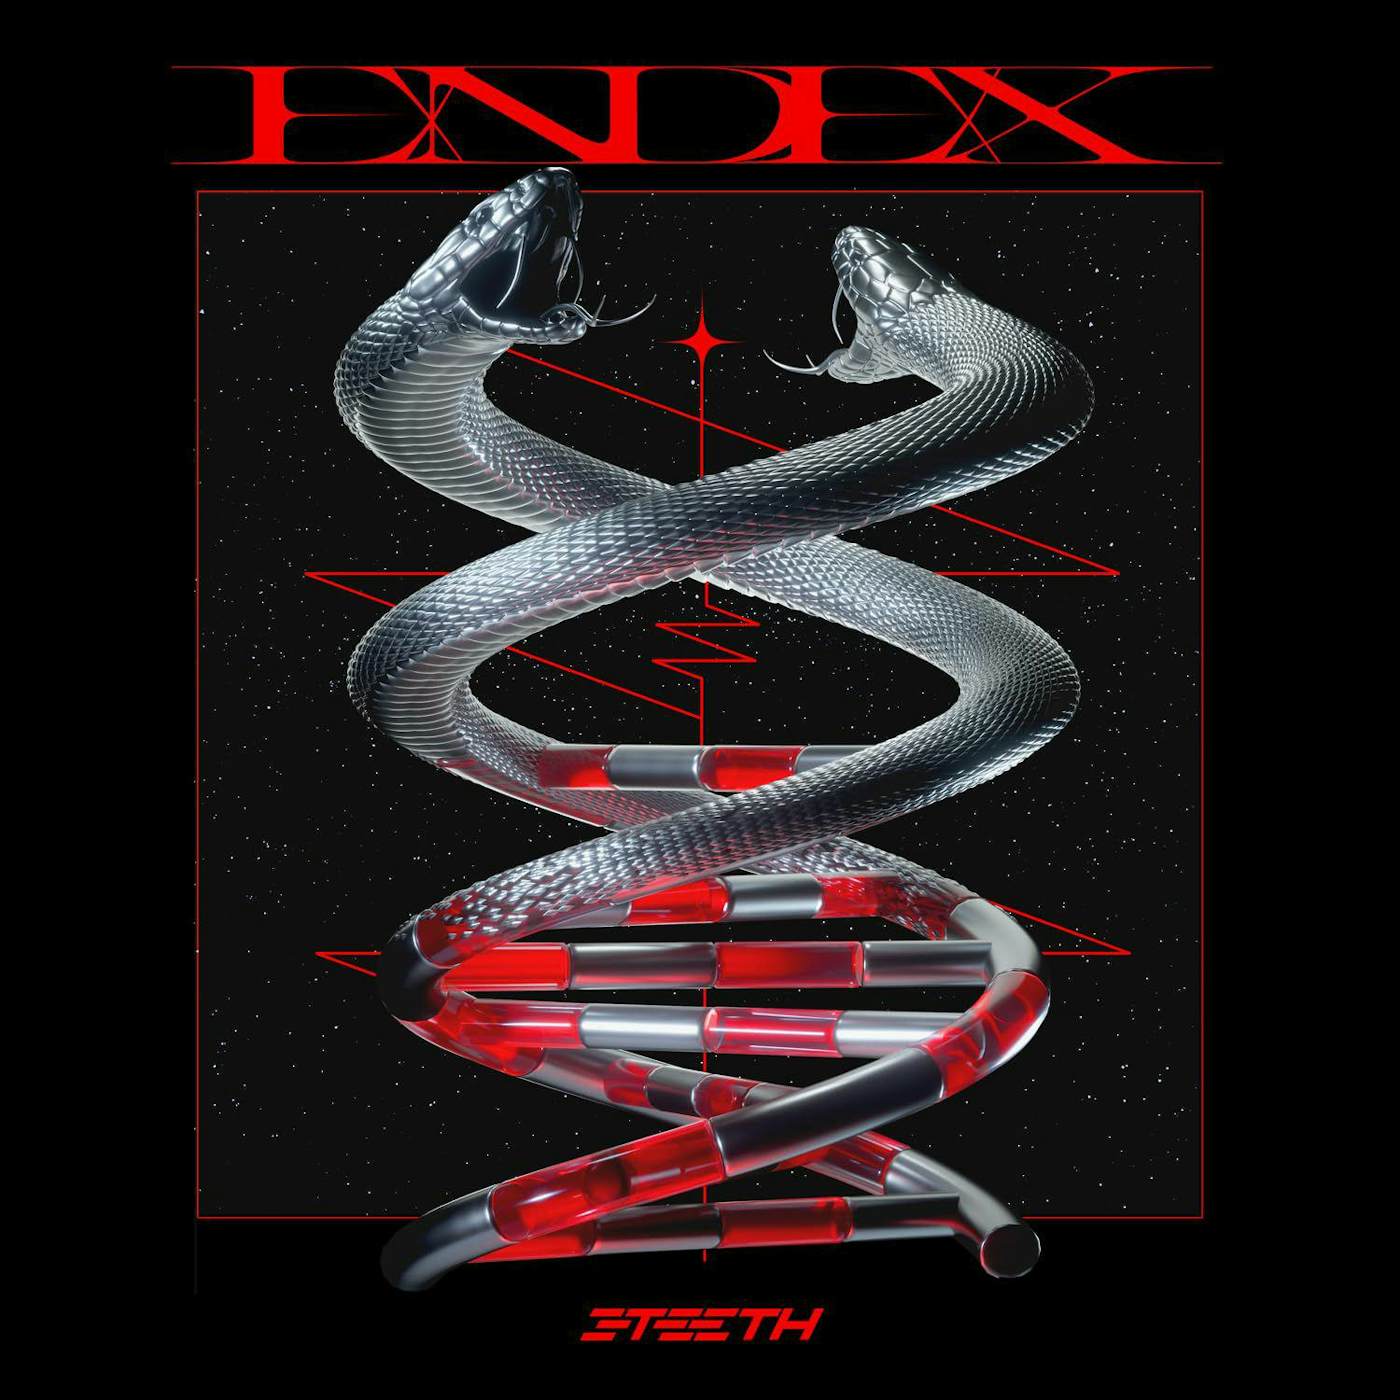 3TEETH Endex Vinyl Record